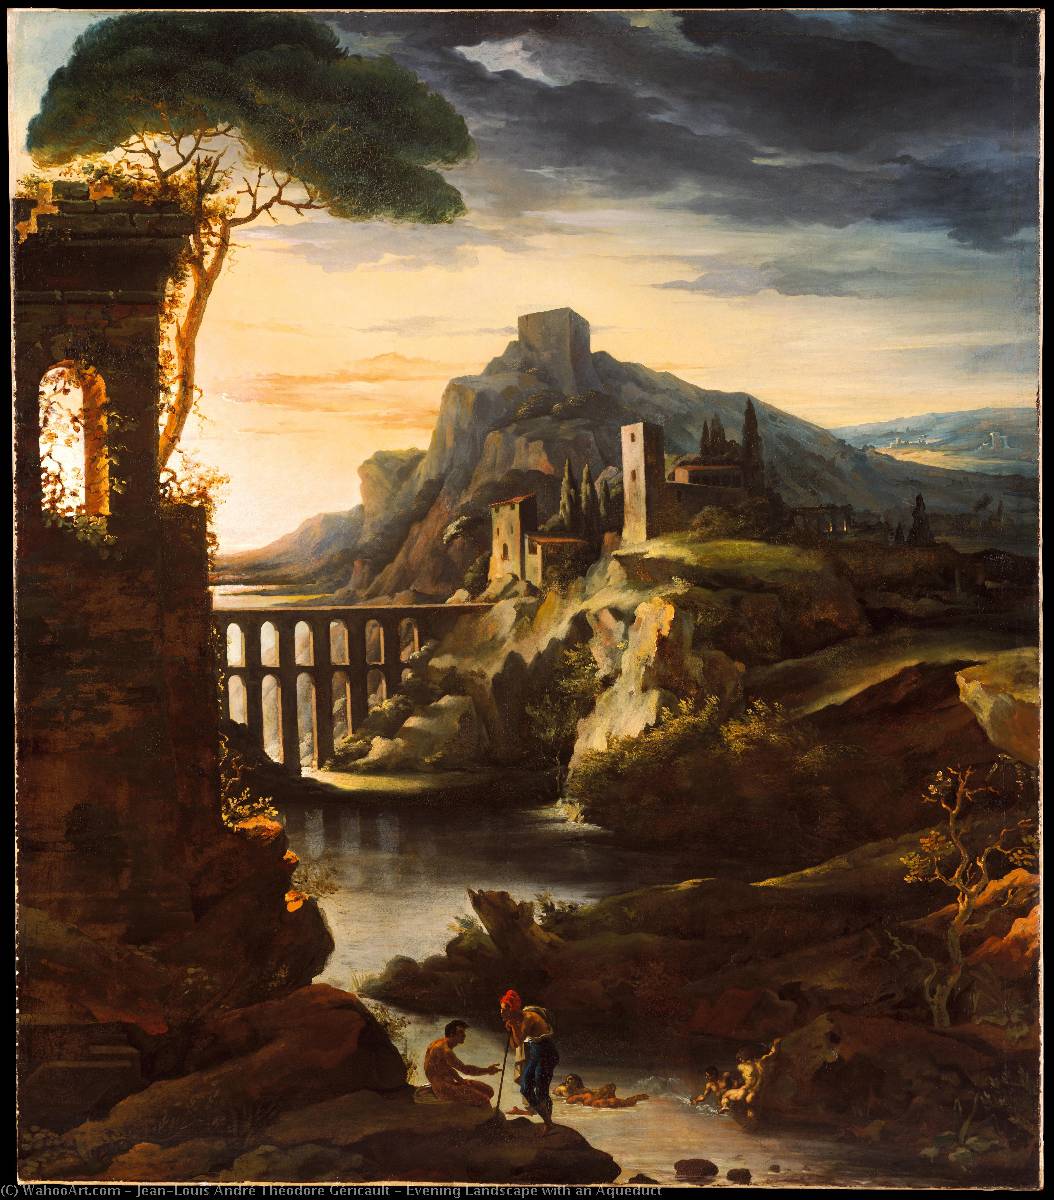 WikiOO.org - אנציקלופדיה לאמנויות יפות - ציור, יצירות אמנות Jean-Louis André Théodore Géricault - Evening Landscape with an Aqueduct